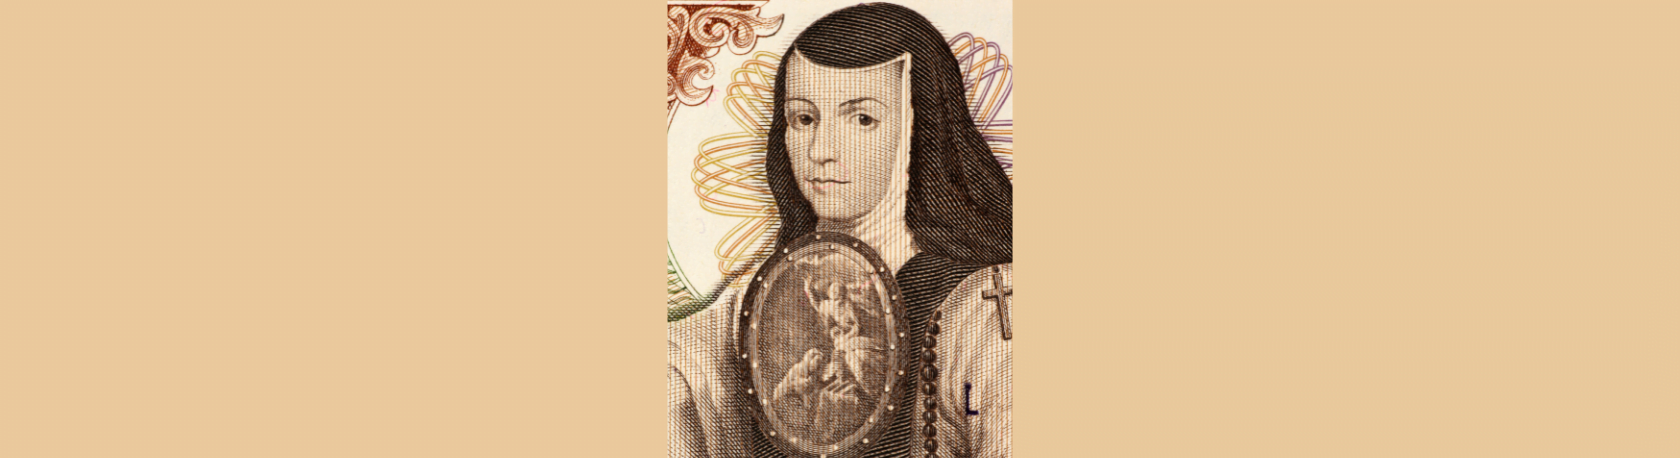 Easy Podcast: Sor Juana Inés de la Cruz, la primera feminista de América - Easy Español